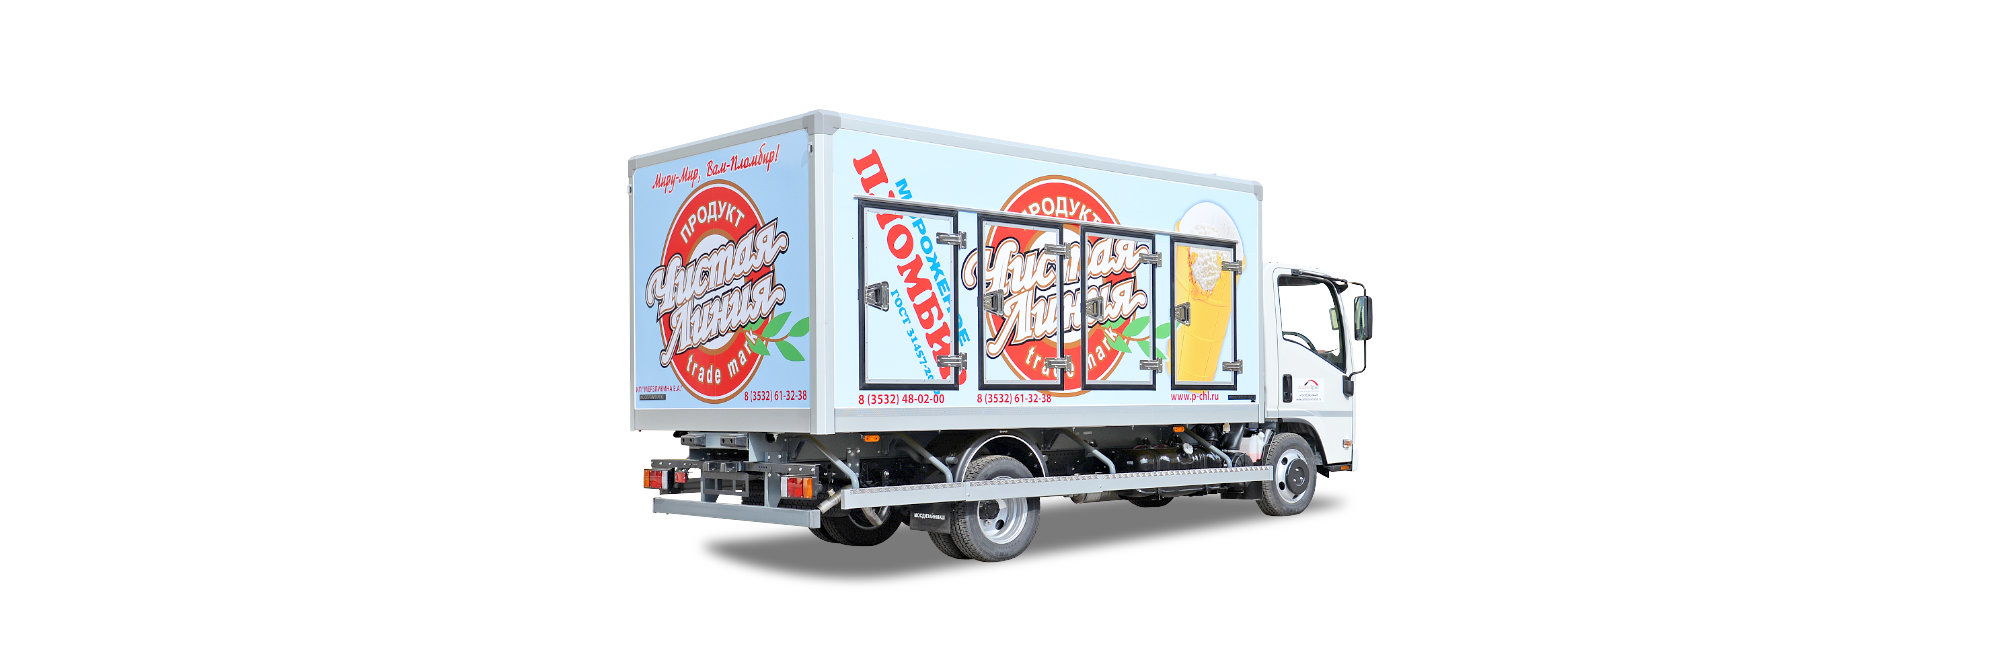 Decopan Ticari Araç CTP levha Chisnaya Liniya dondurma kamyon kasa üretimi